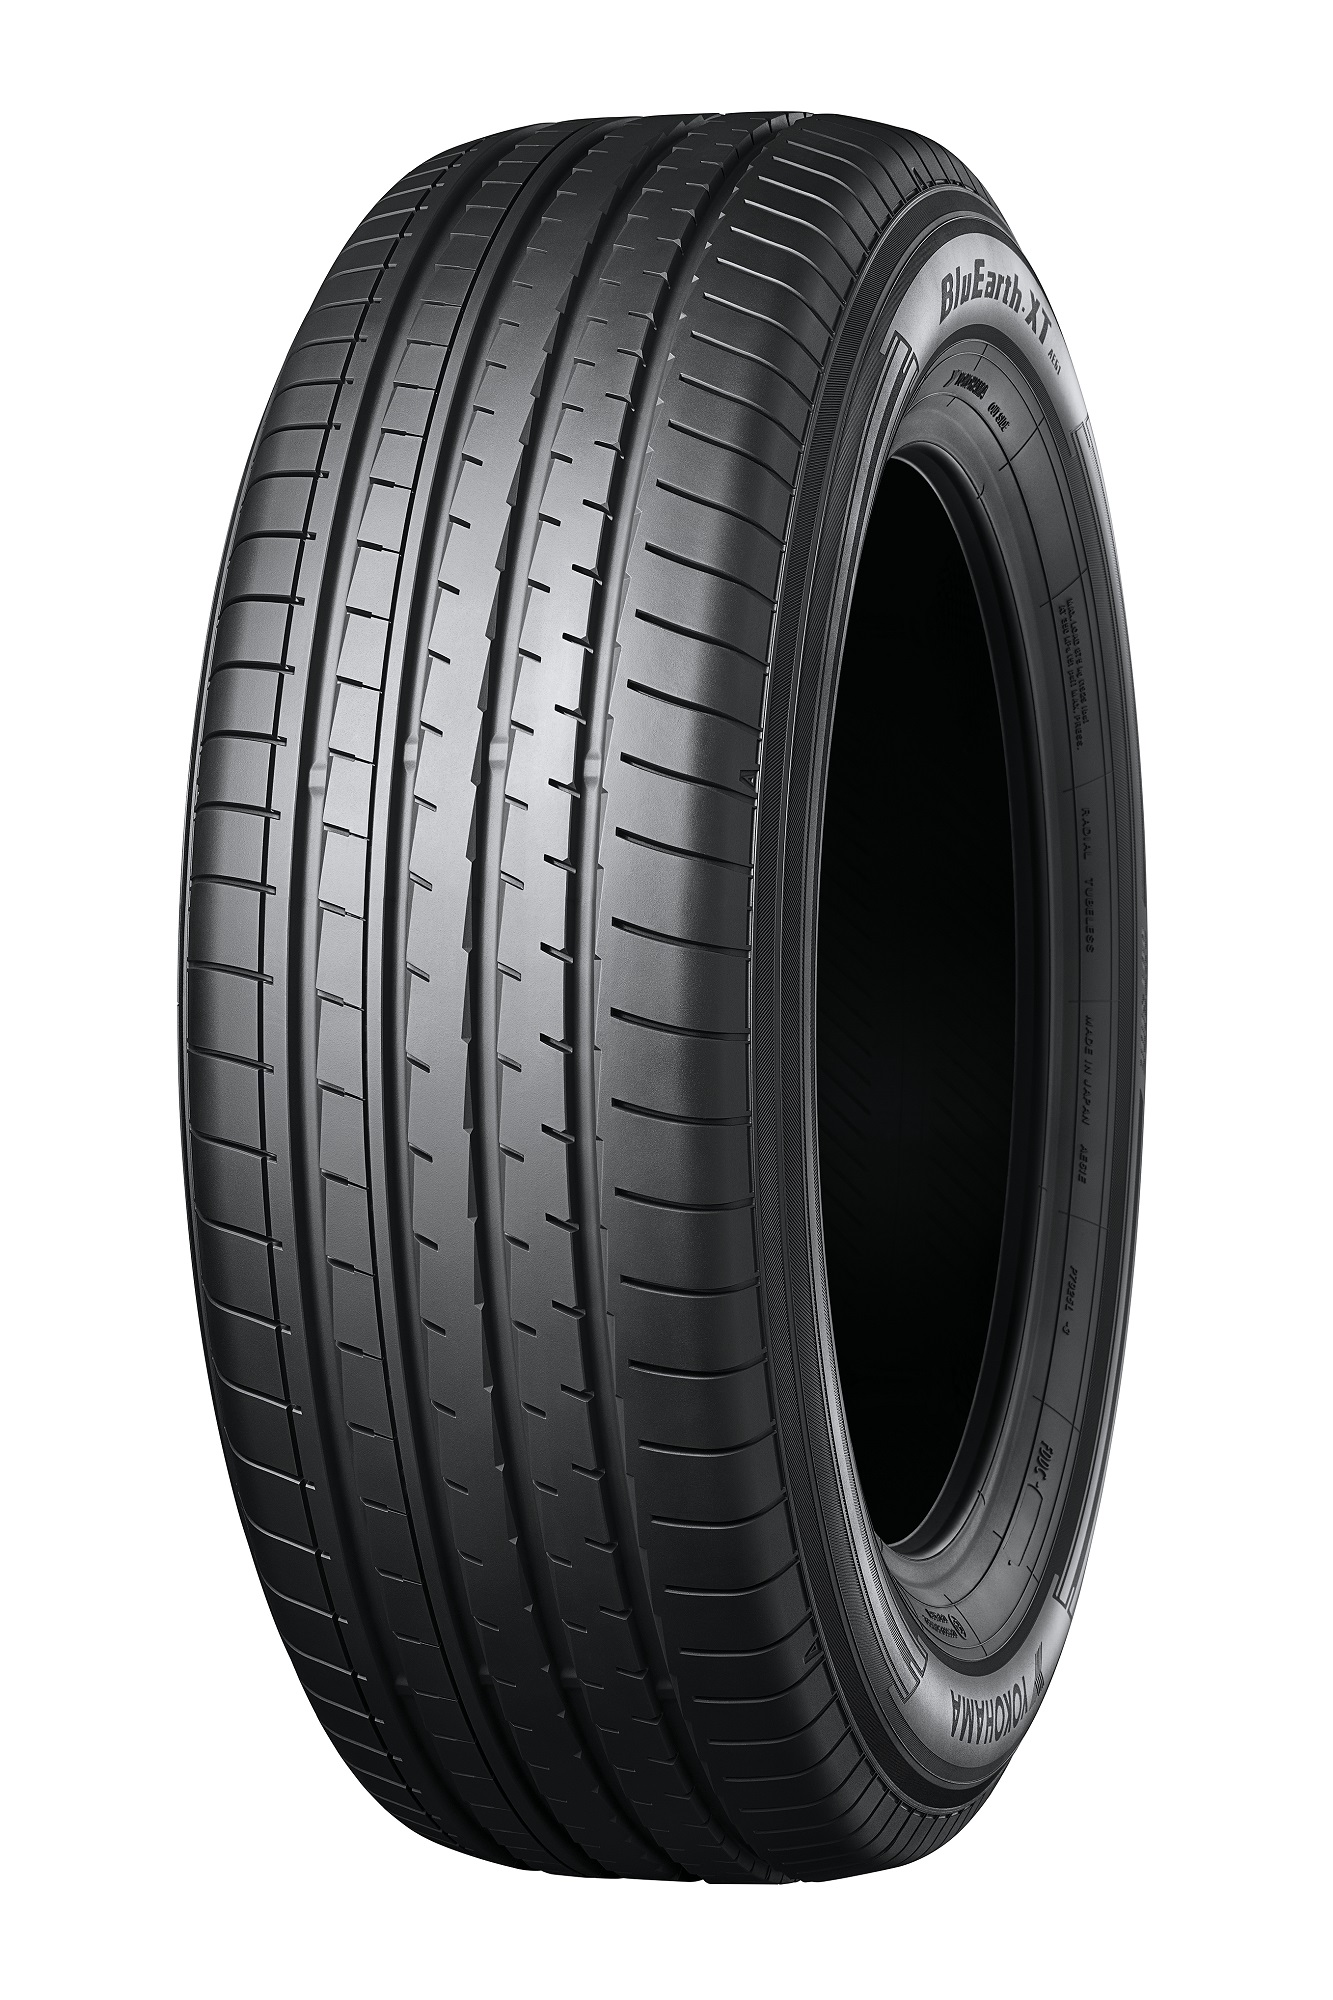 AE61 Tire Reviews BluEarth - Tests and Yokohama XT